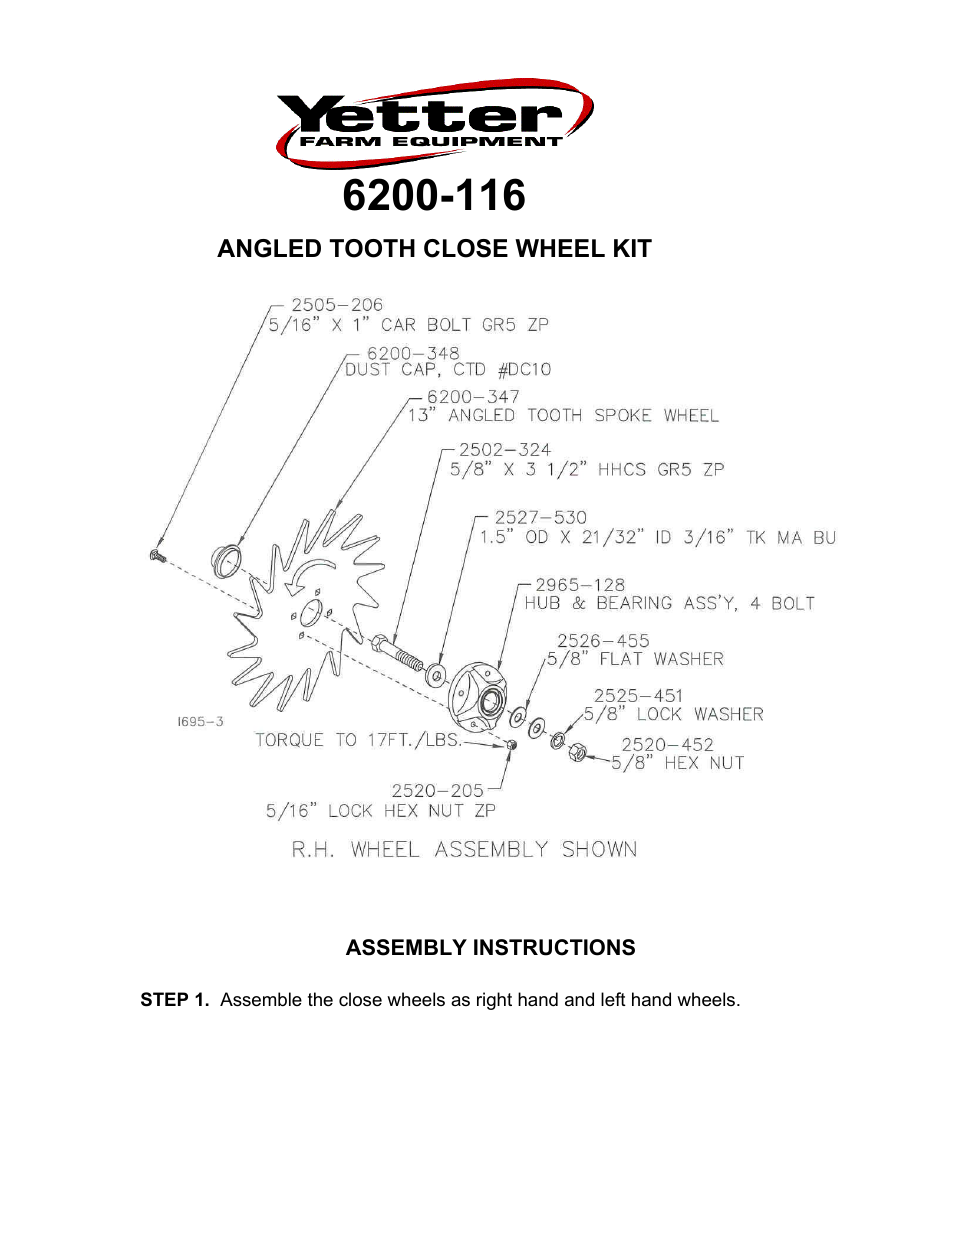 6200-116 Angled Tooth Close Wheel Kit